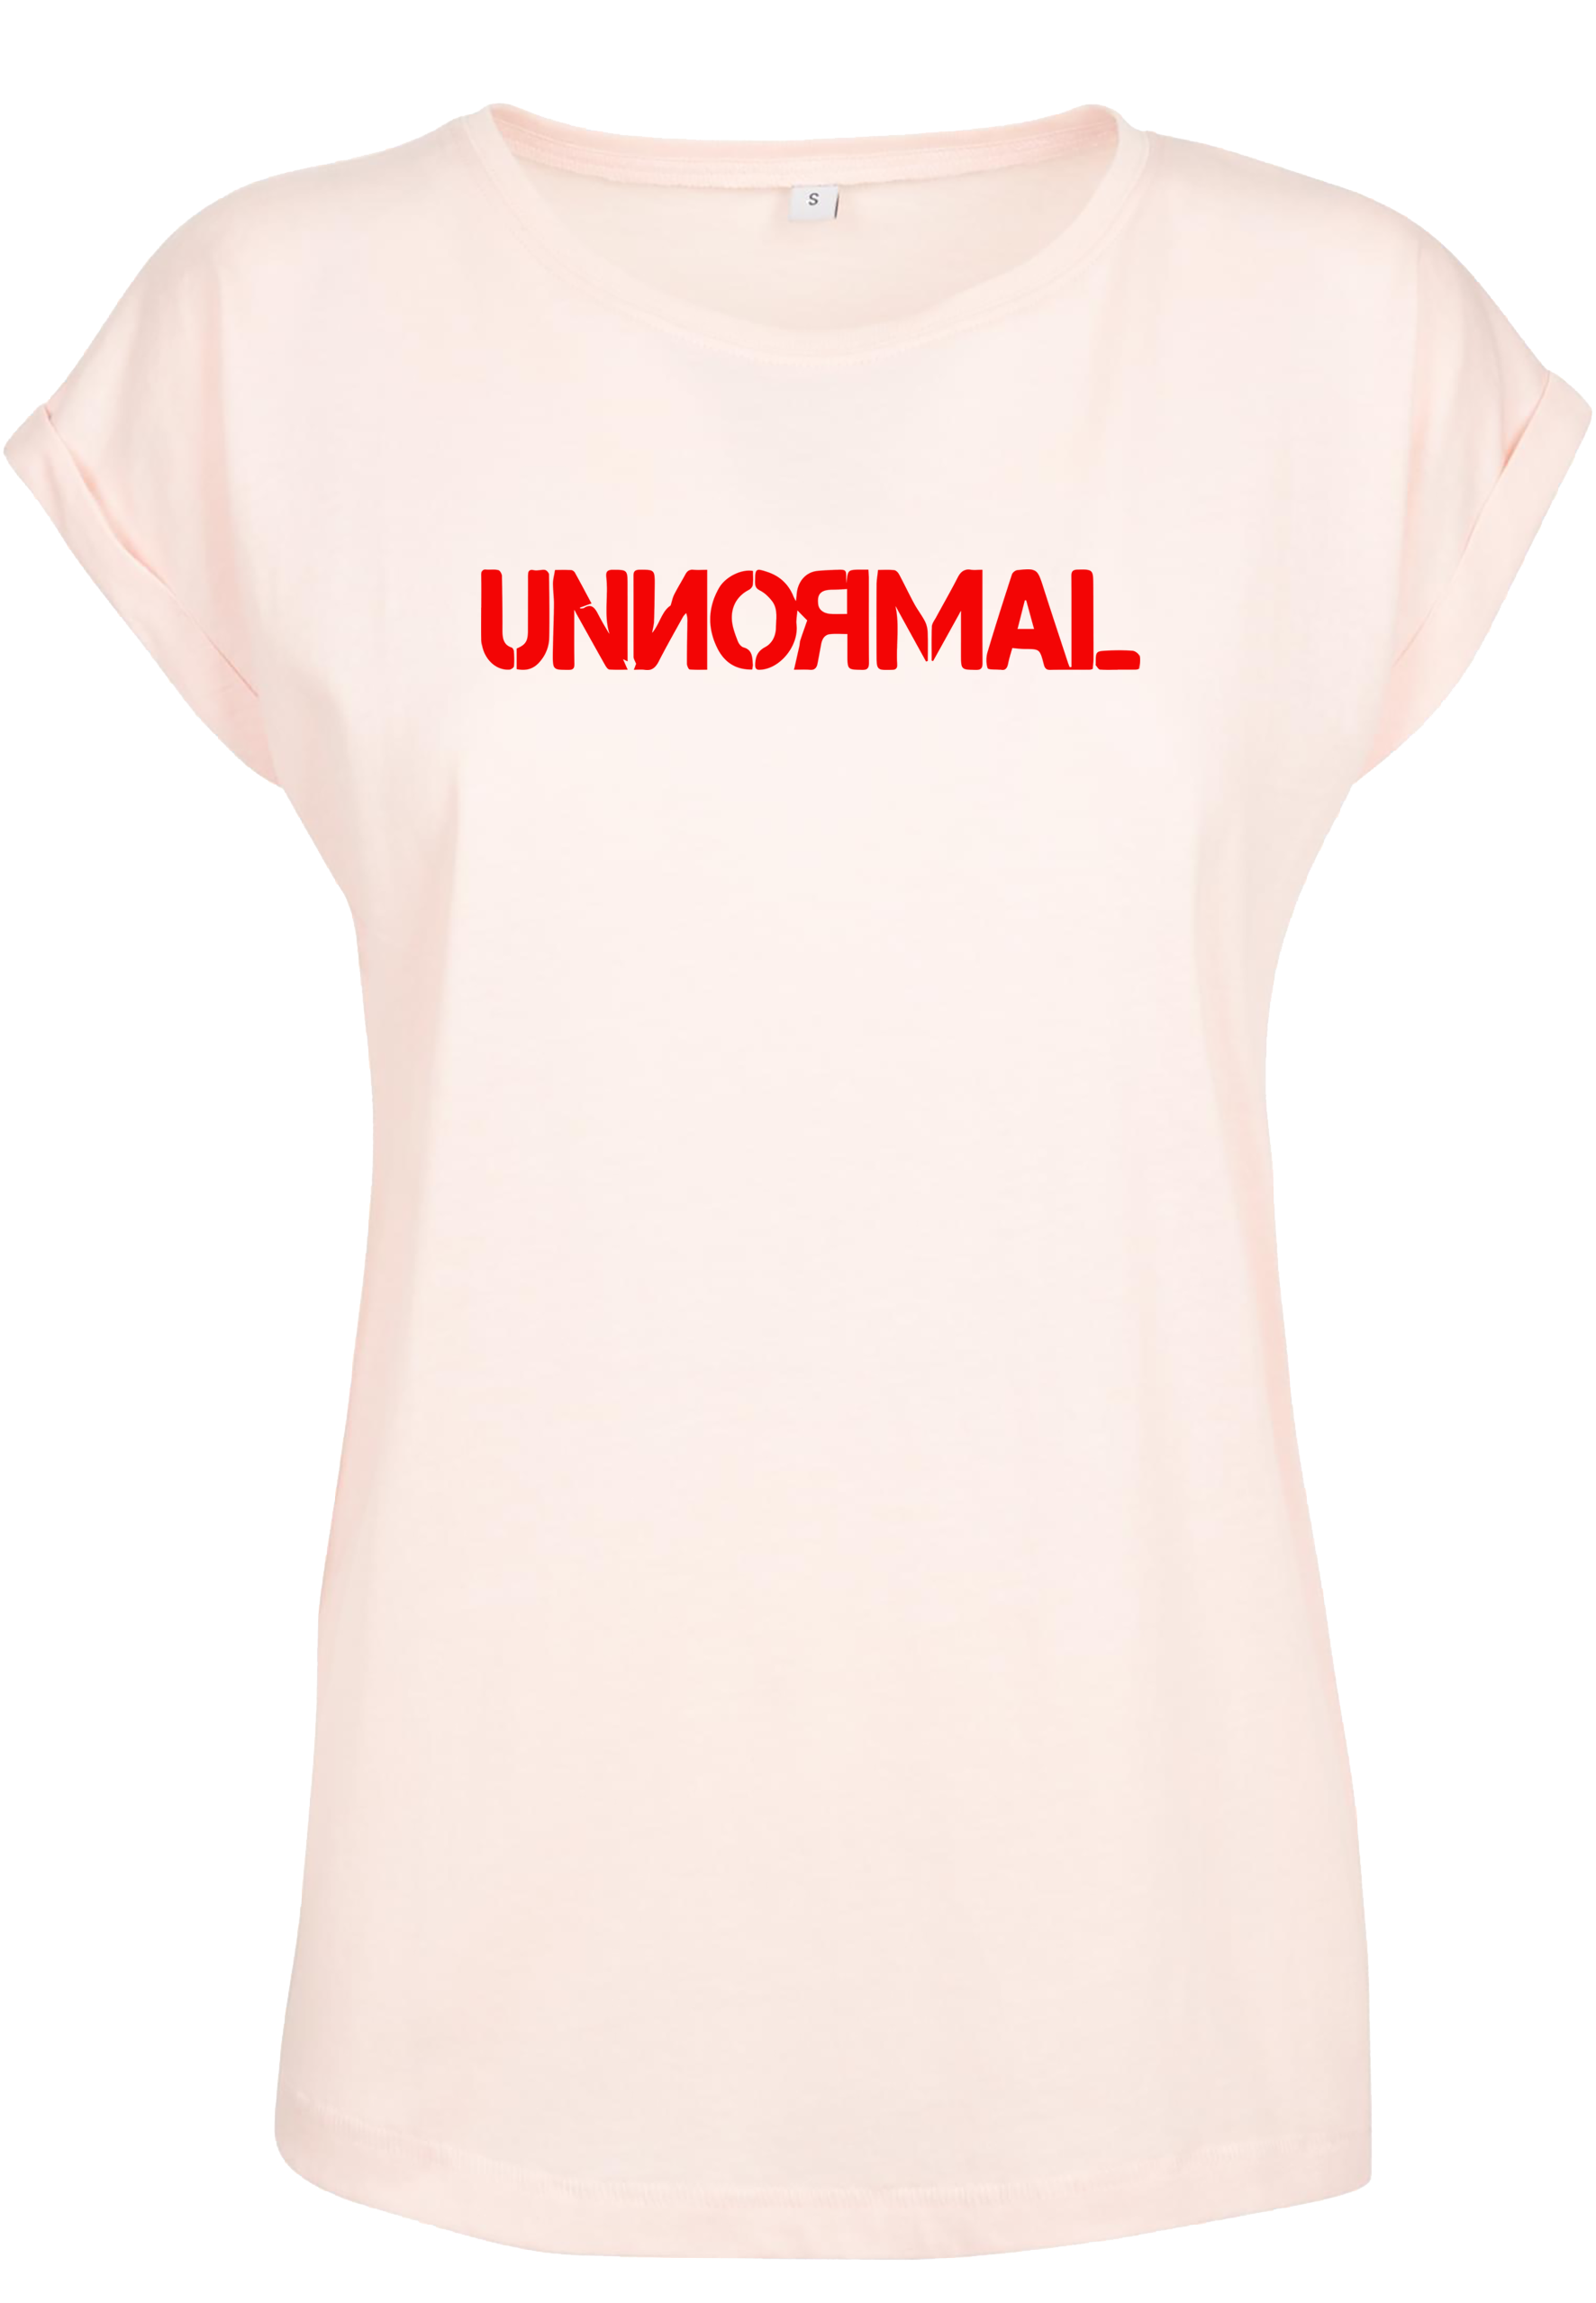 UNNORMAL - Logo - Girl Extended Shirt [pink]